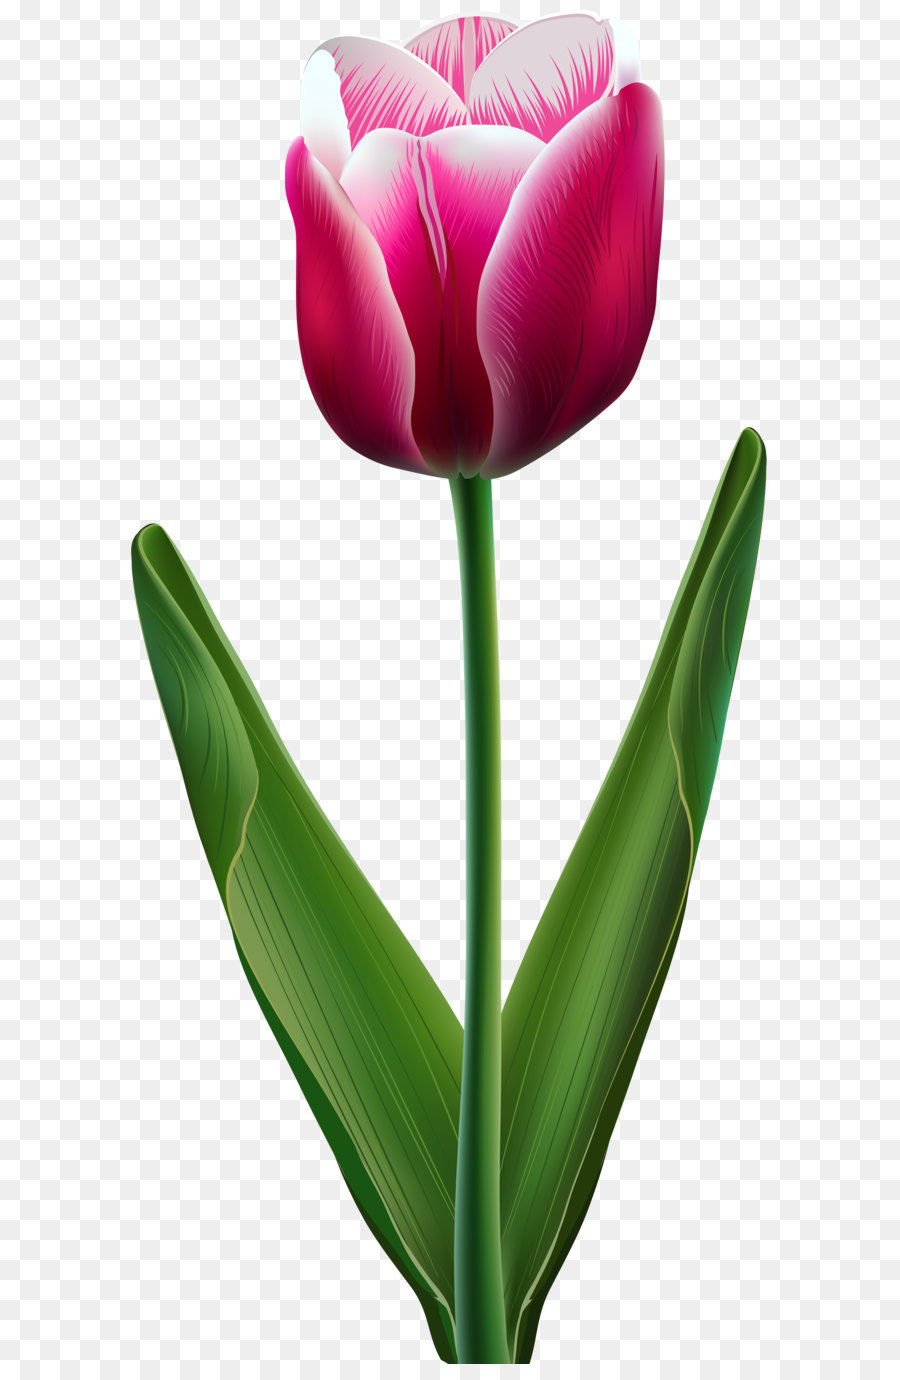 Tulip Flower Clip art - Beautiful Tulip Transparent PNG Clip Art Image png download - 3812*8000 - Free Transparent Tulip png Download.